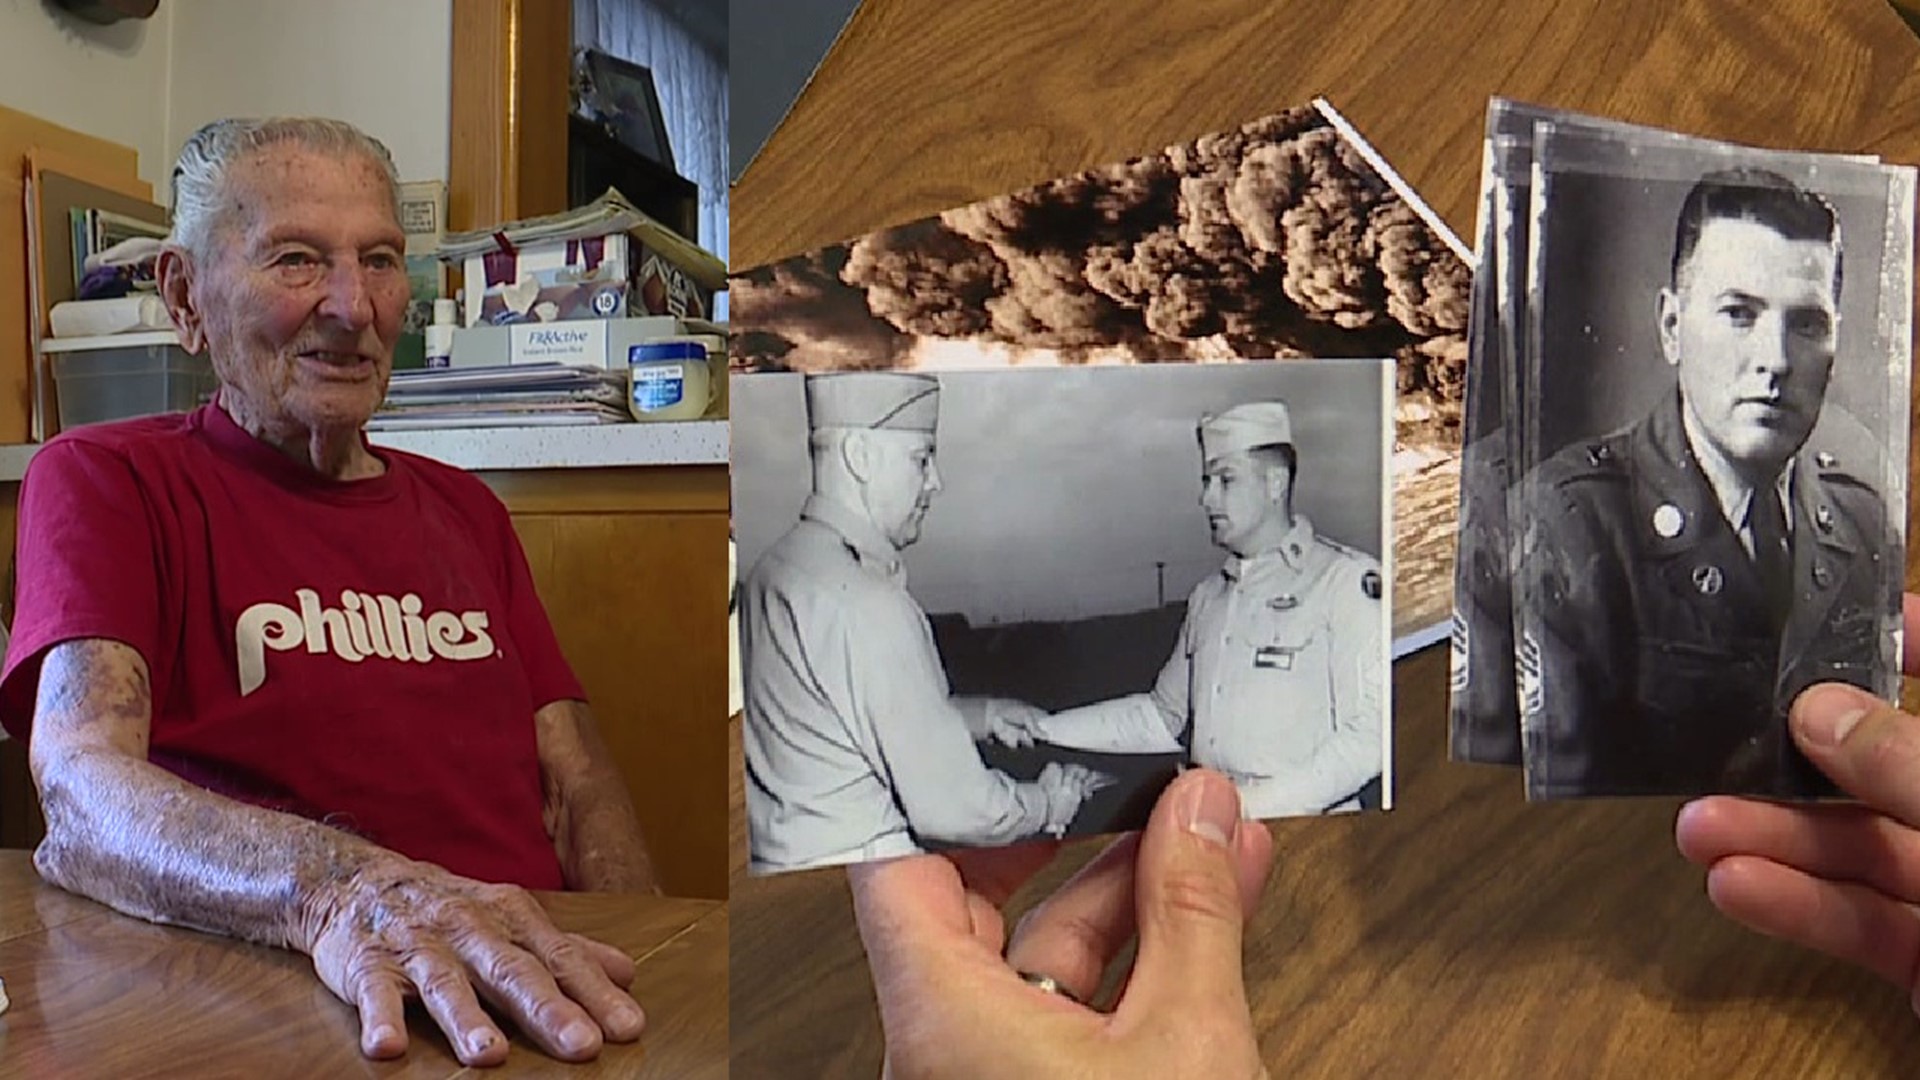 When a World War II veteran like Walter Pasiak of Scranton wants to share his memories, we should all listen.